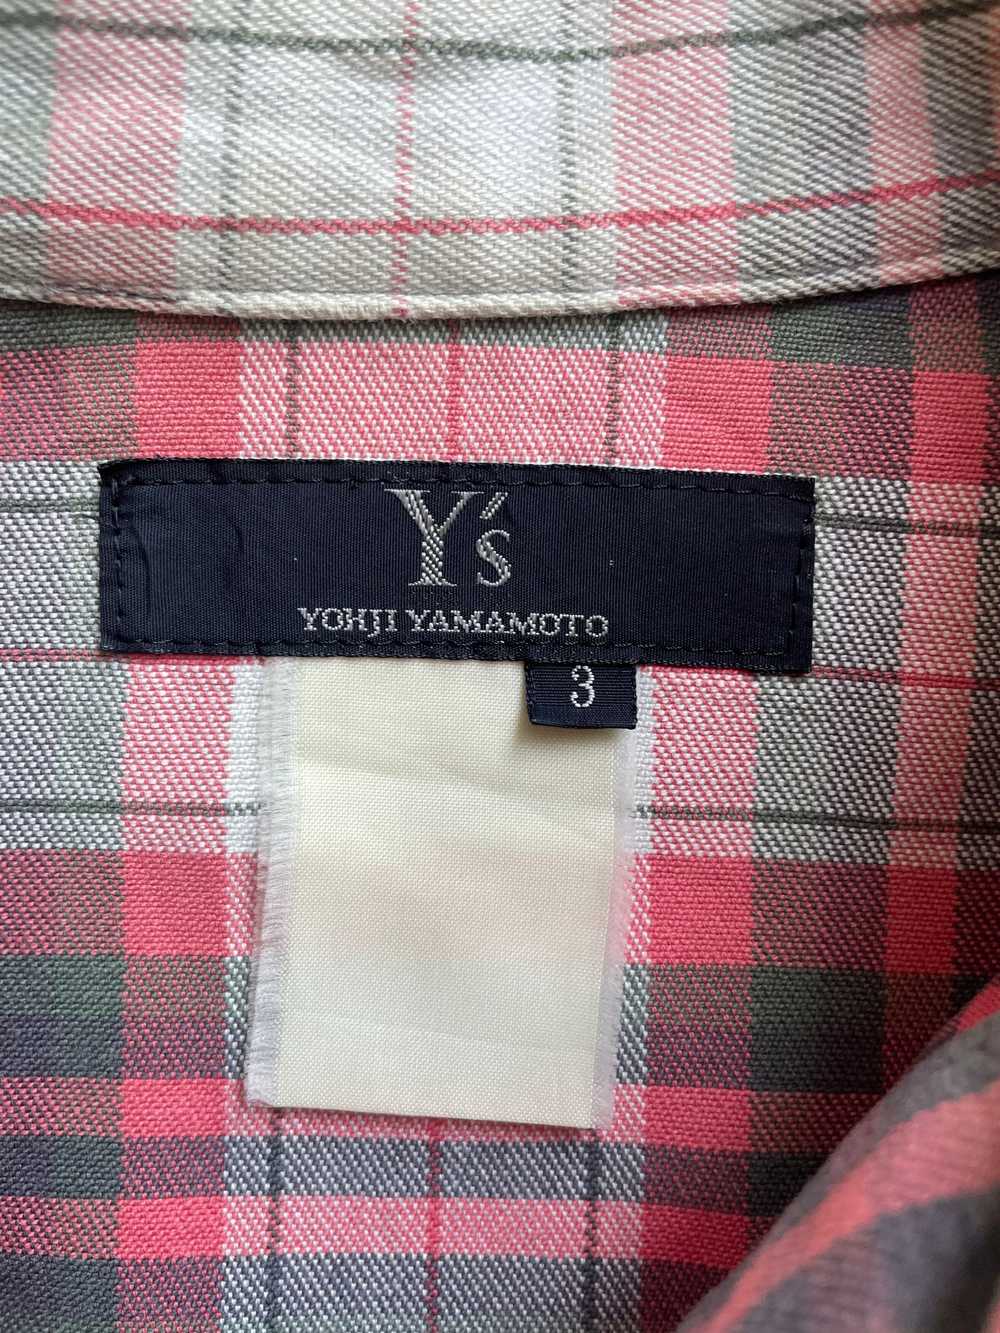 Yohji Yamamoto × Ys (Yamamoto) × Ys For Men / Yam… - image 5